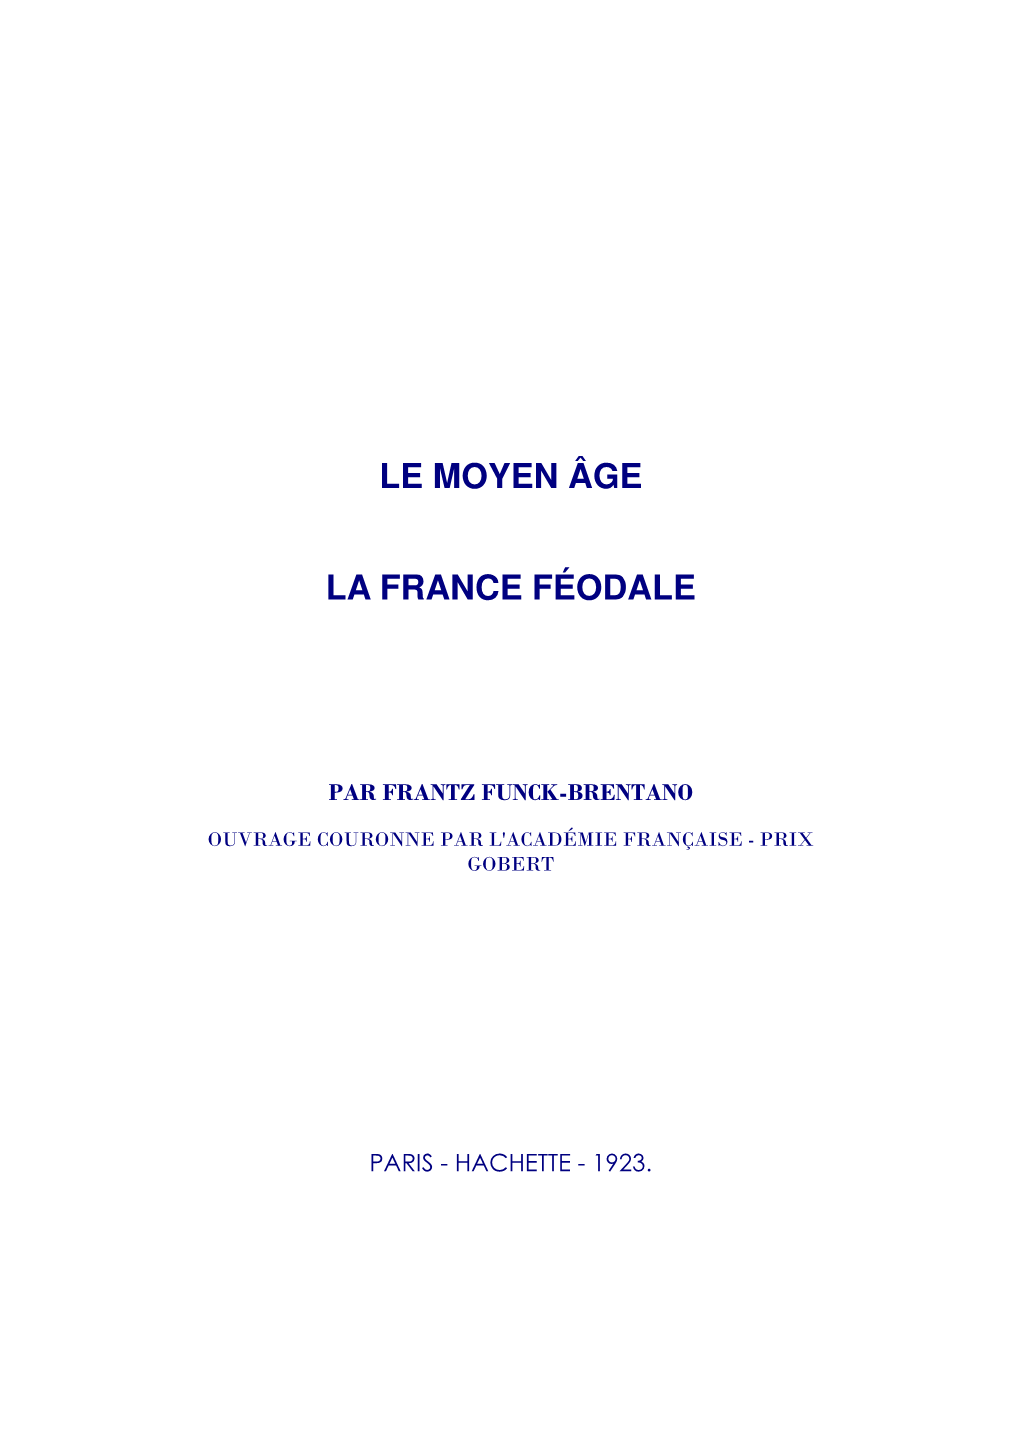 Le Moyen-Âge — La France Féodale